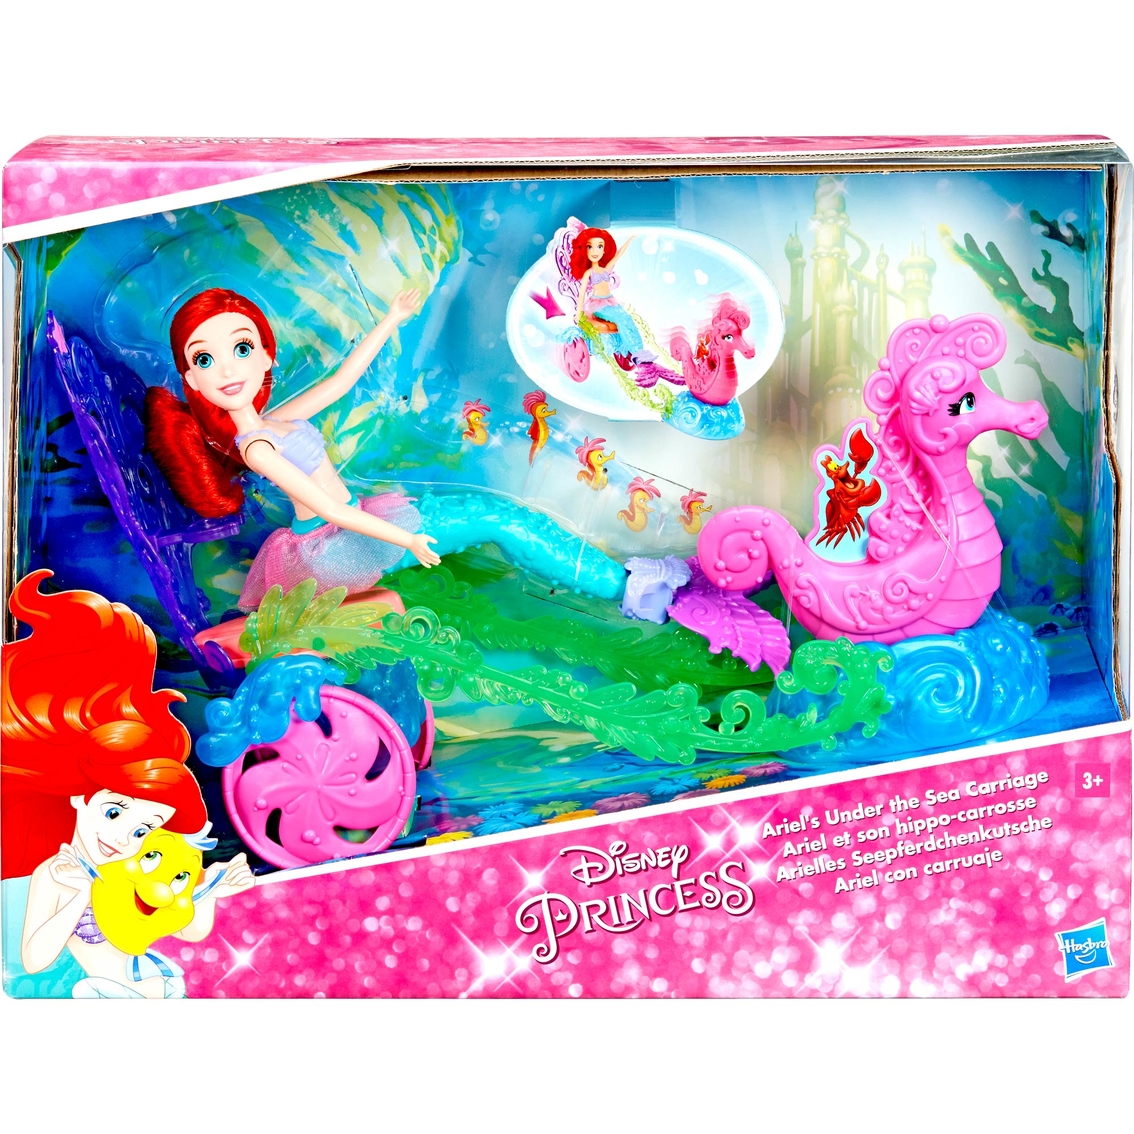 Disney Princess Ariel's Under The Sea Carriage - Image 2 of 3